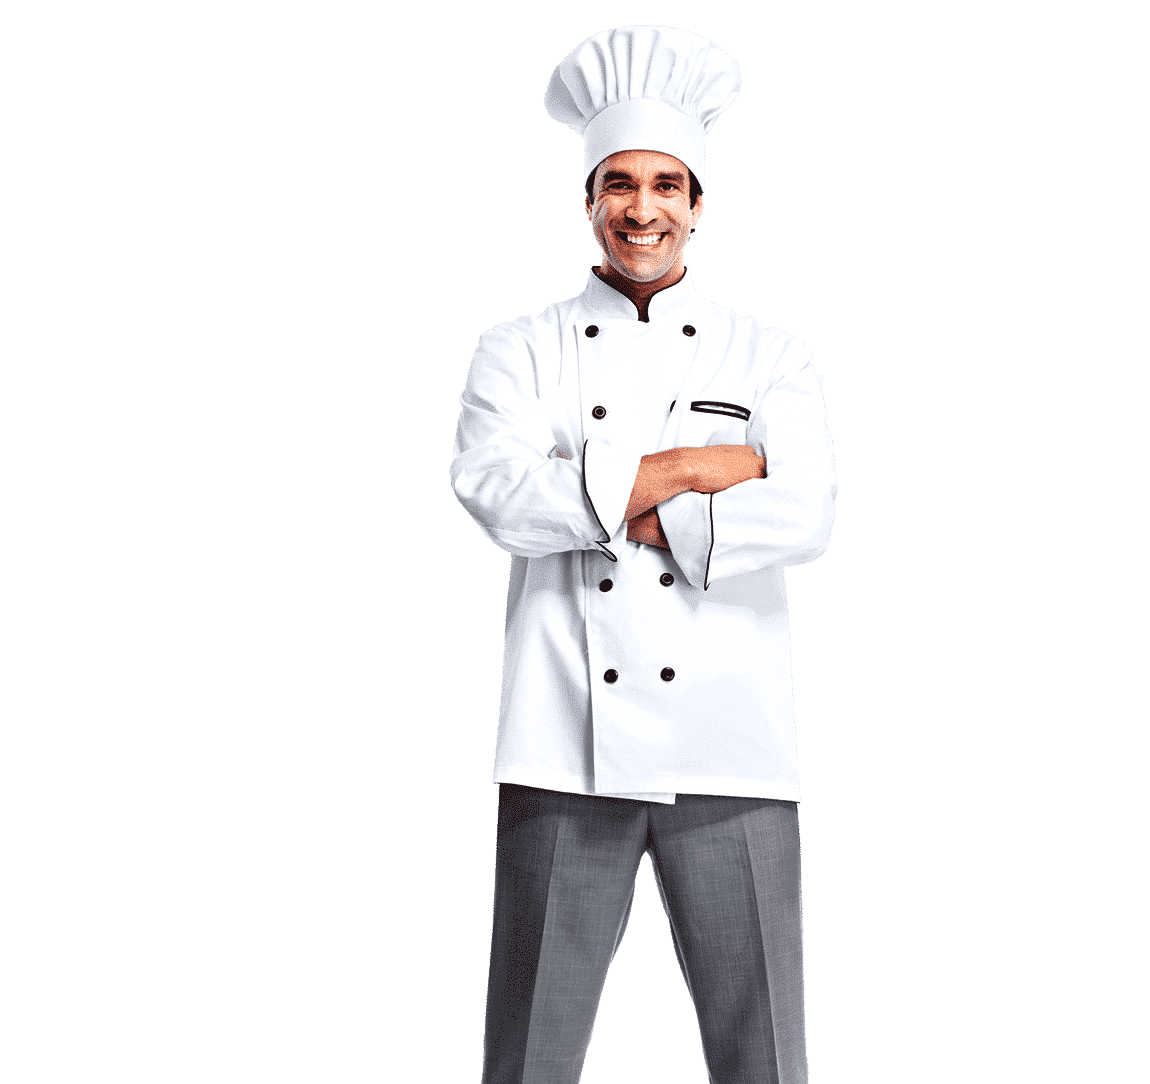 Restaurant Chef Professional Marketing Services